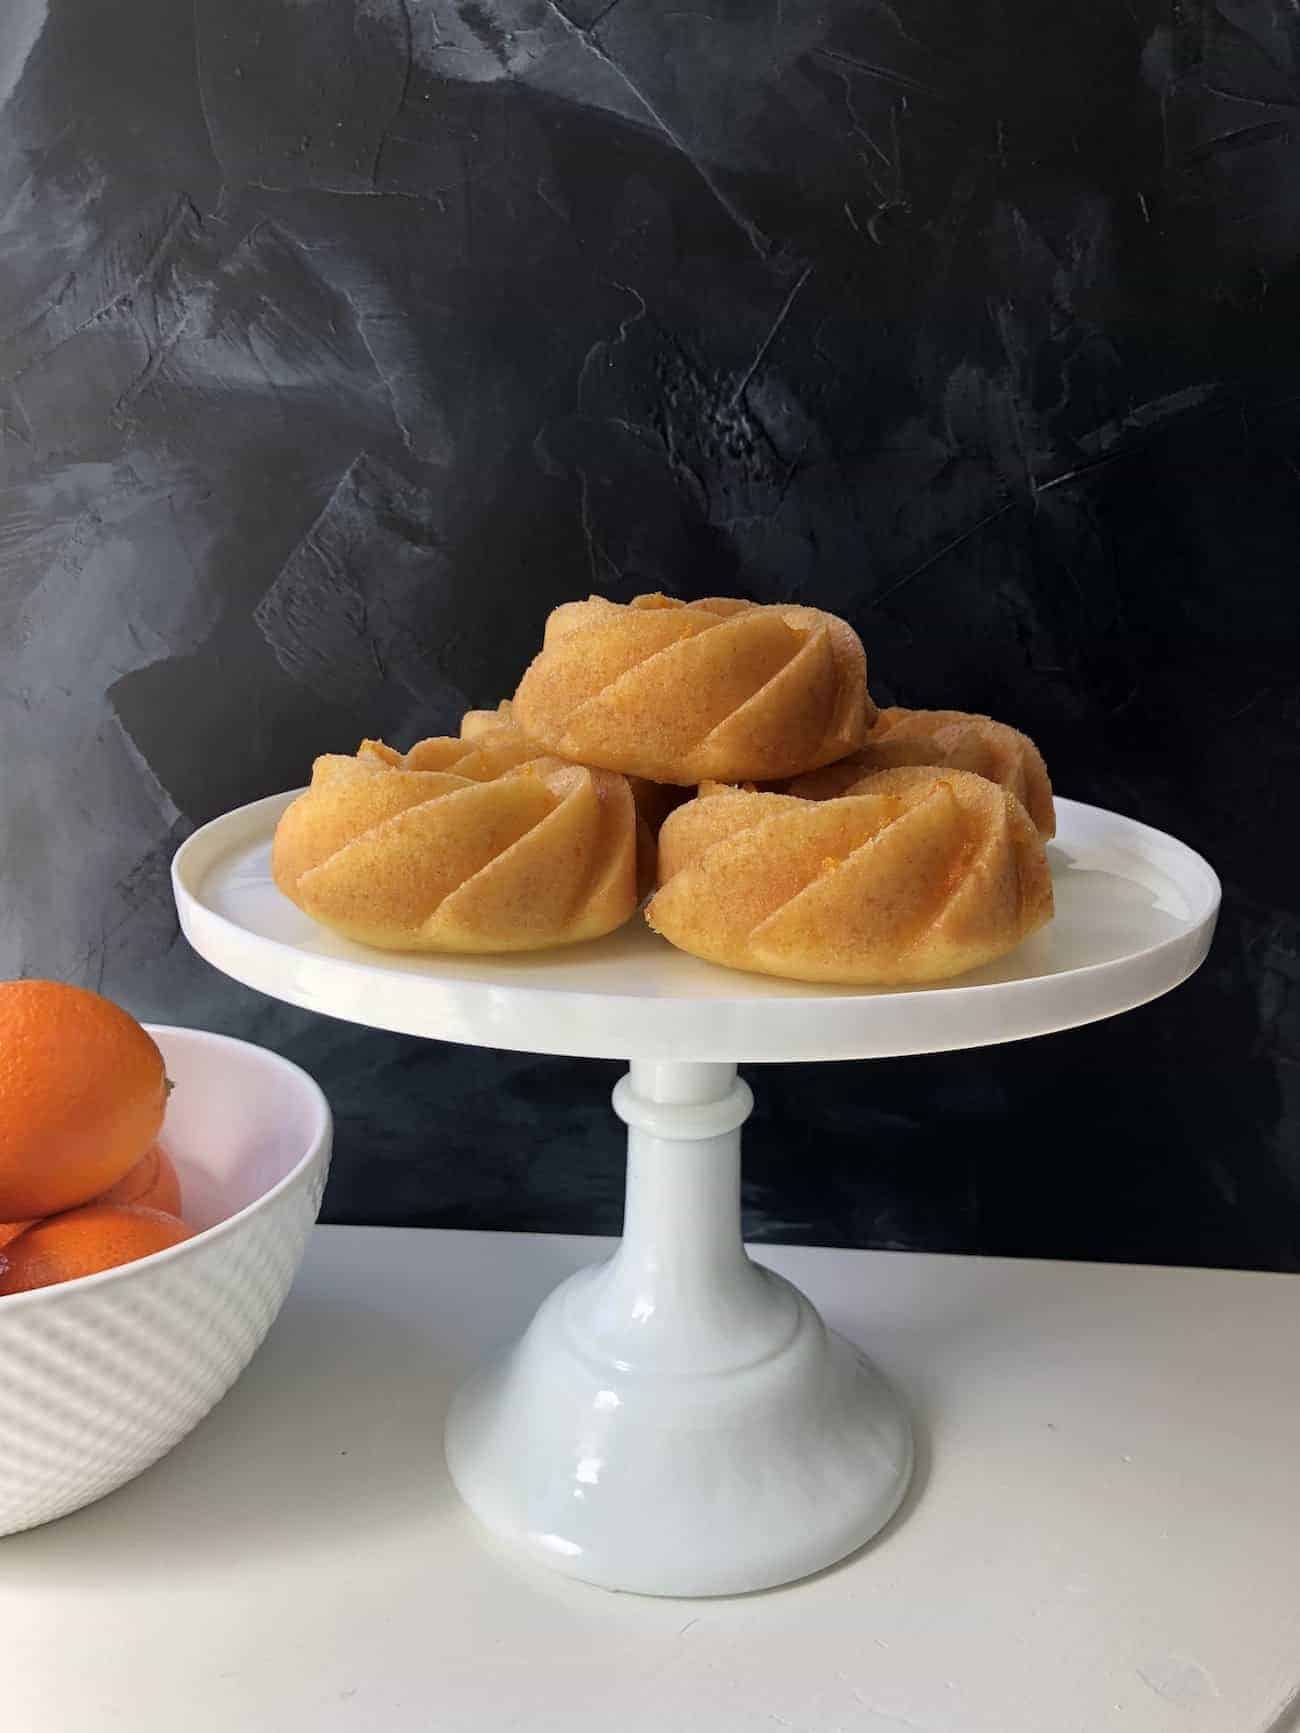 https://mapleandthyme.com/wp-content/uploads/2018/04/Orange-Bundtlette-Cakes-on-Cake-Stand-with-Bowl-of-Oranges.jpg